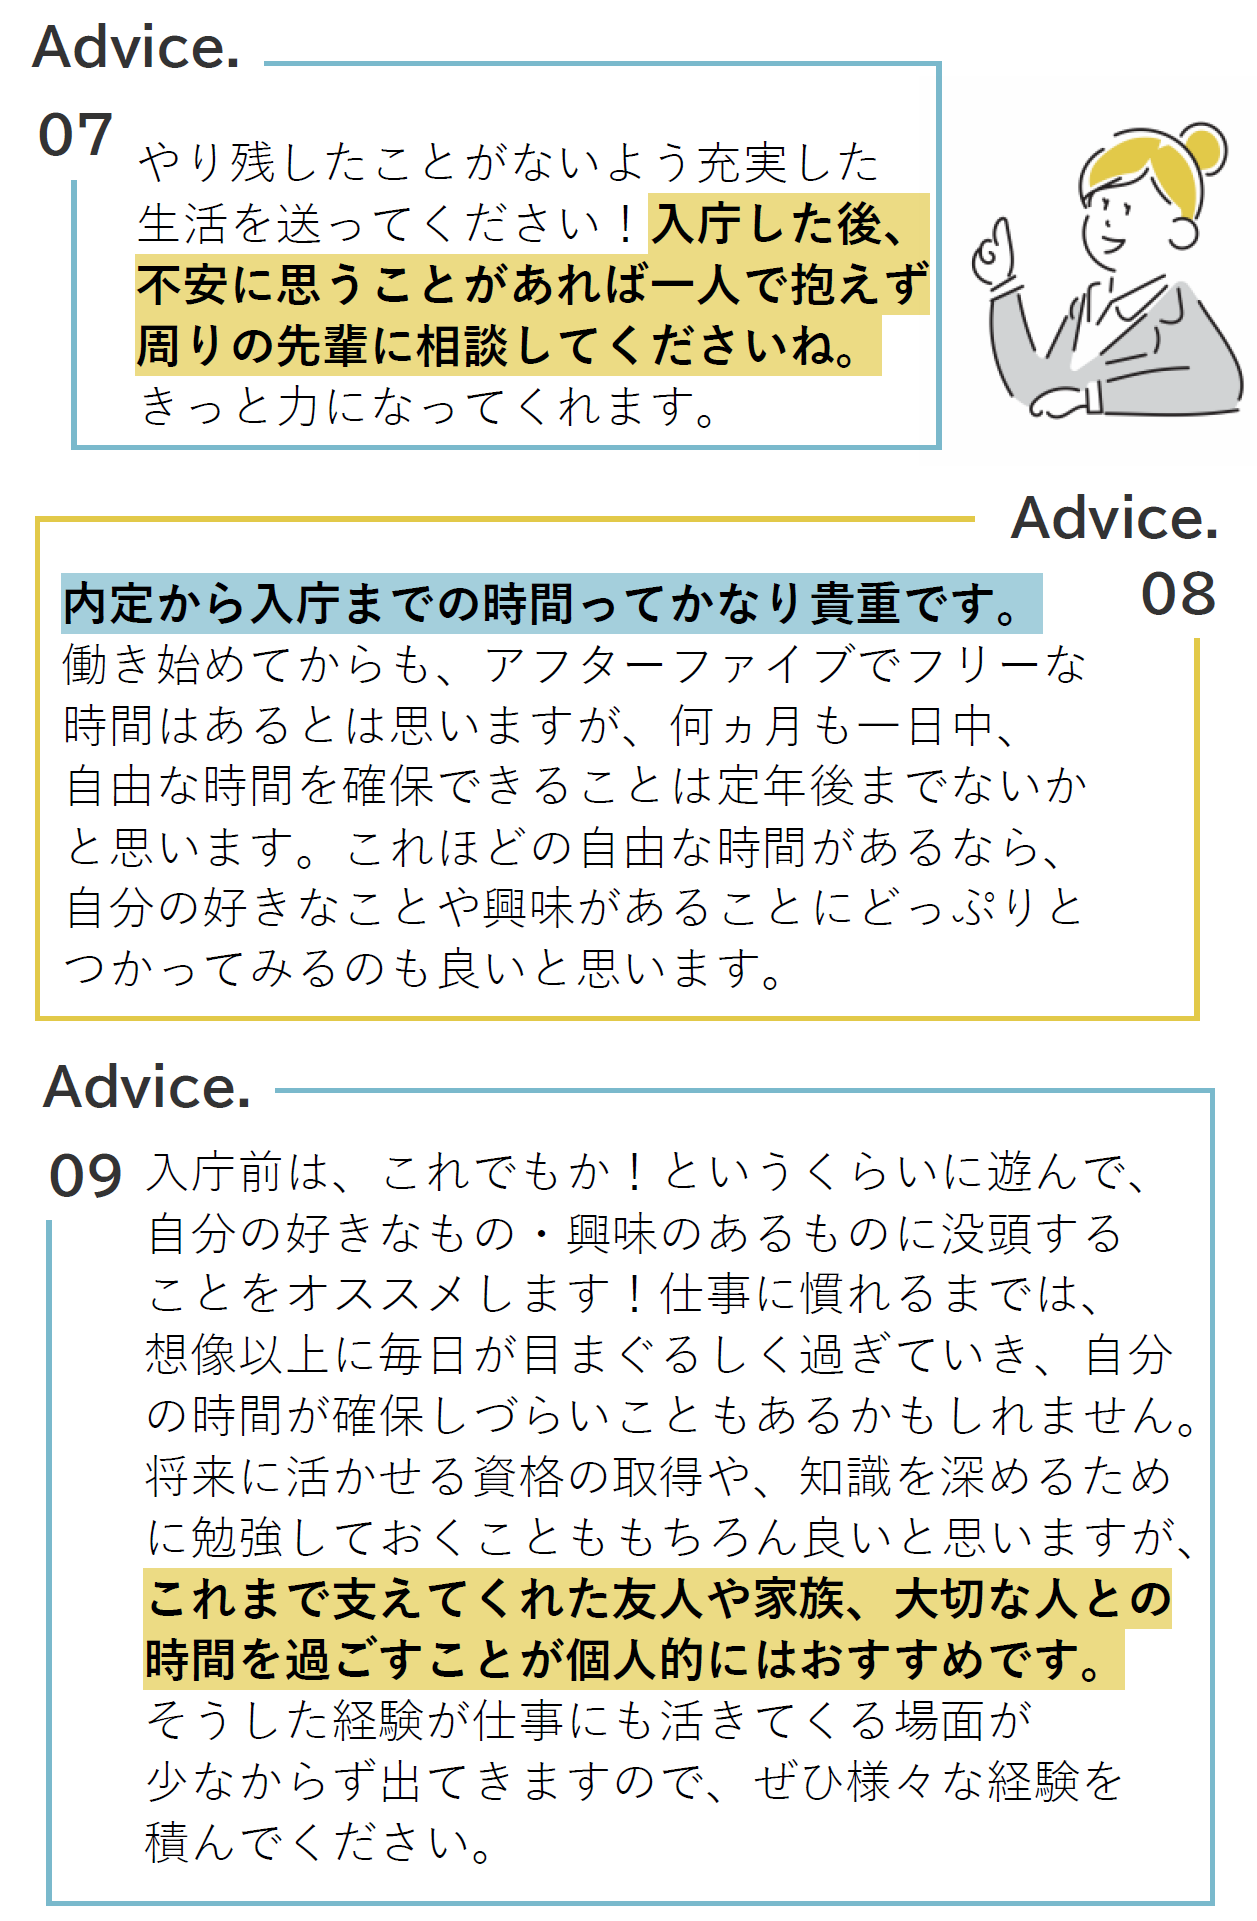 advice-04